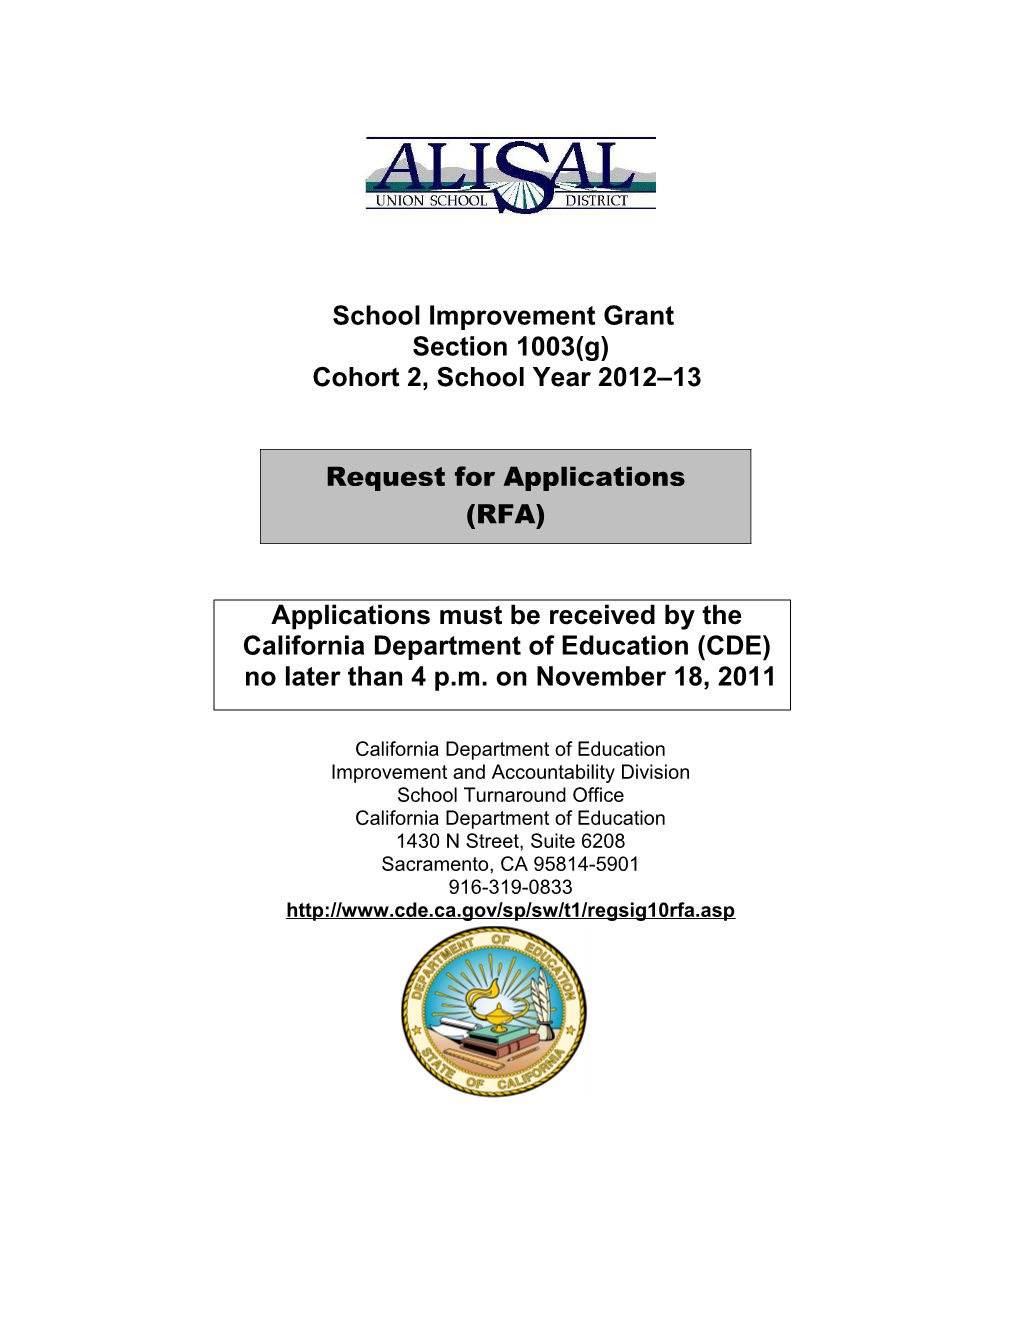 SIG Cohort 2 Application for Alisal USD - Title I (CA Dept of Education)